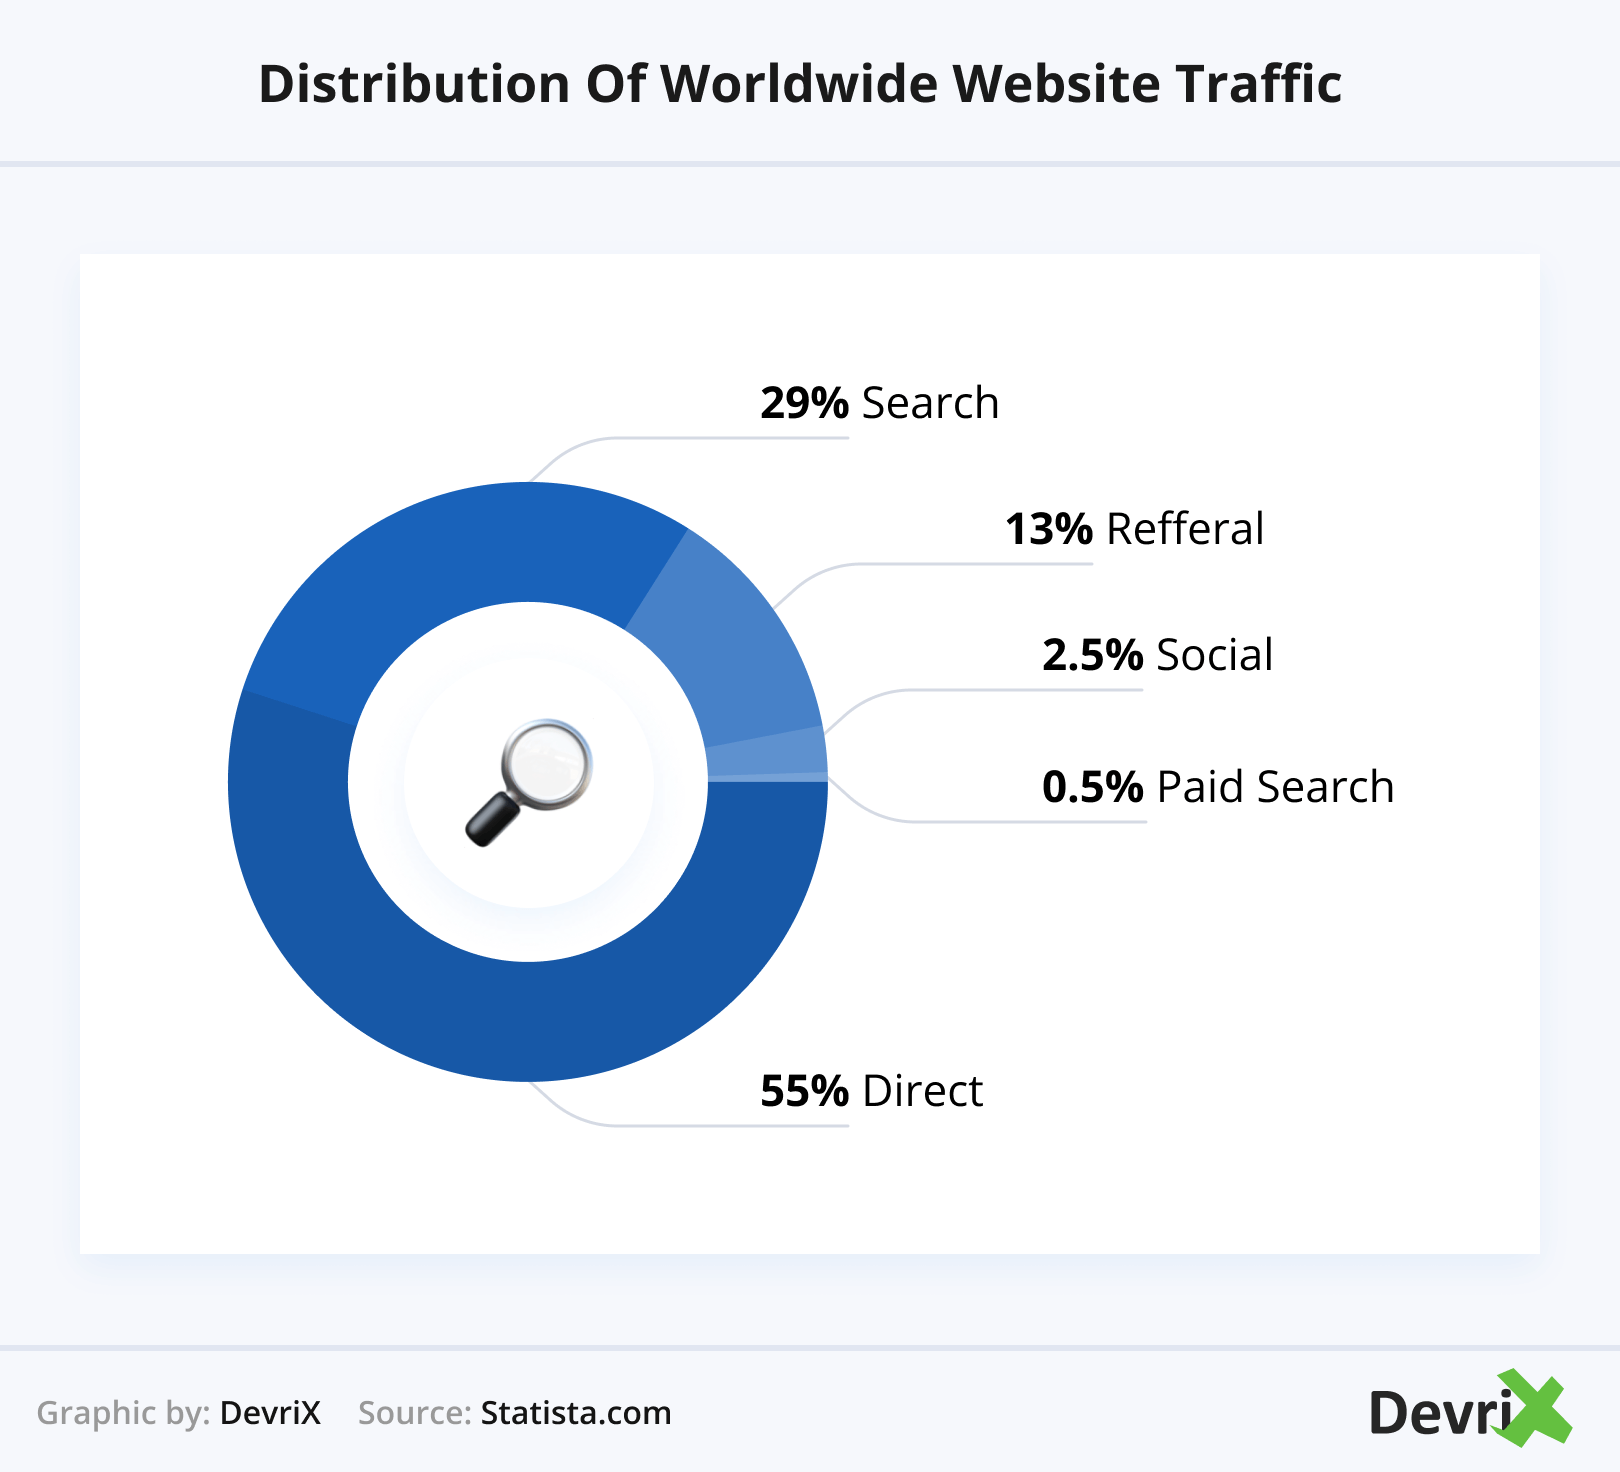 Distribution of worldwide website traffic